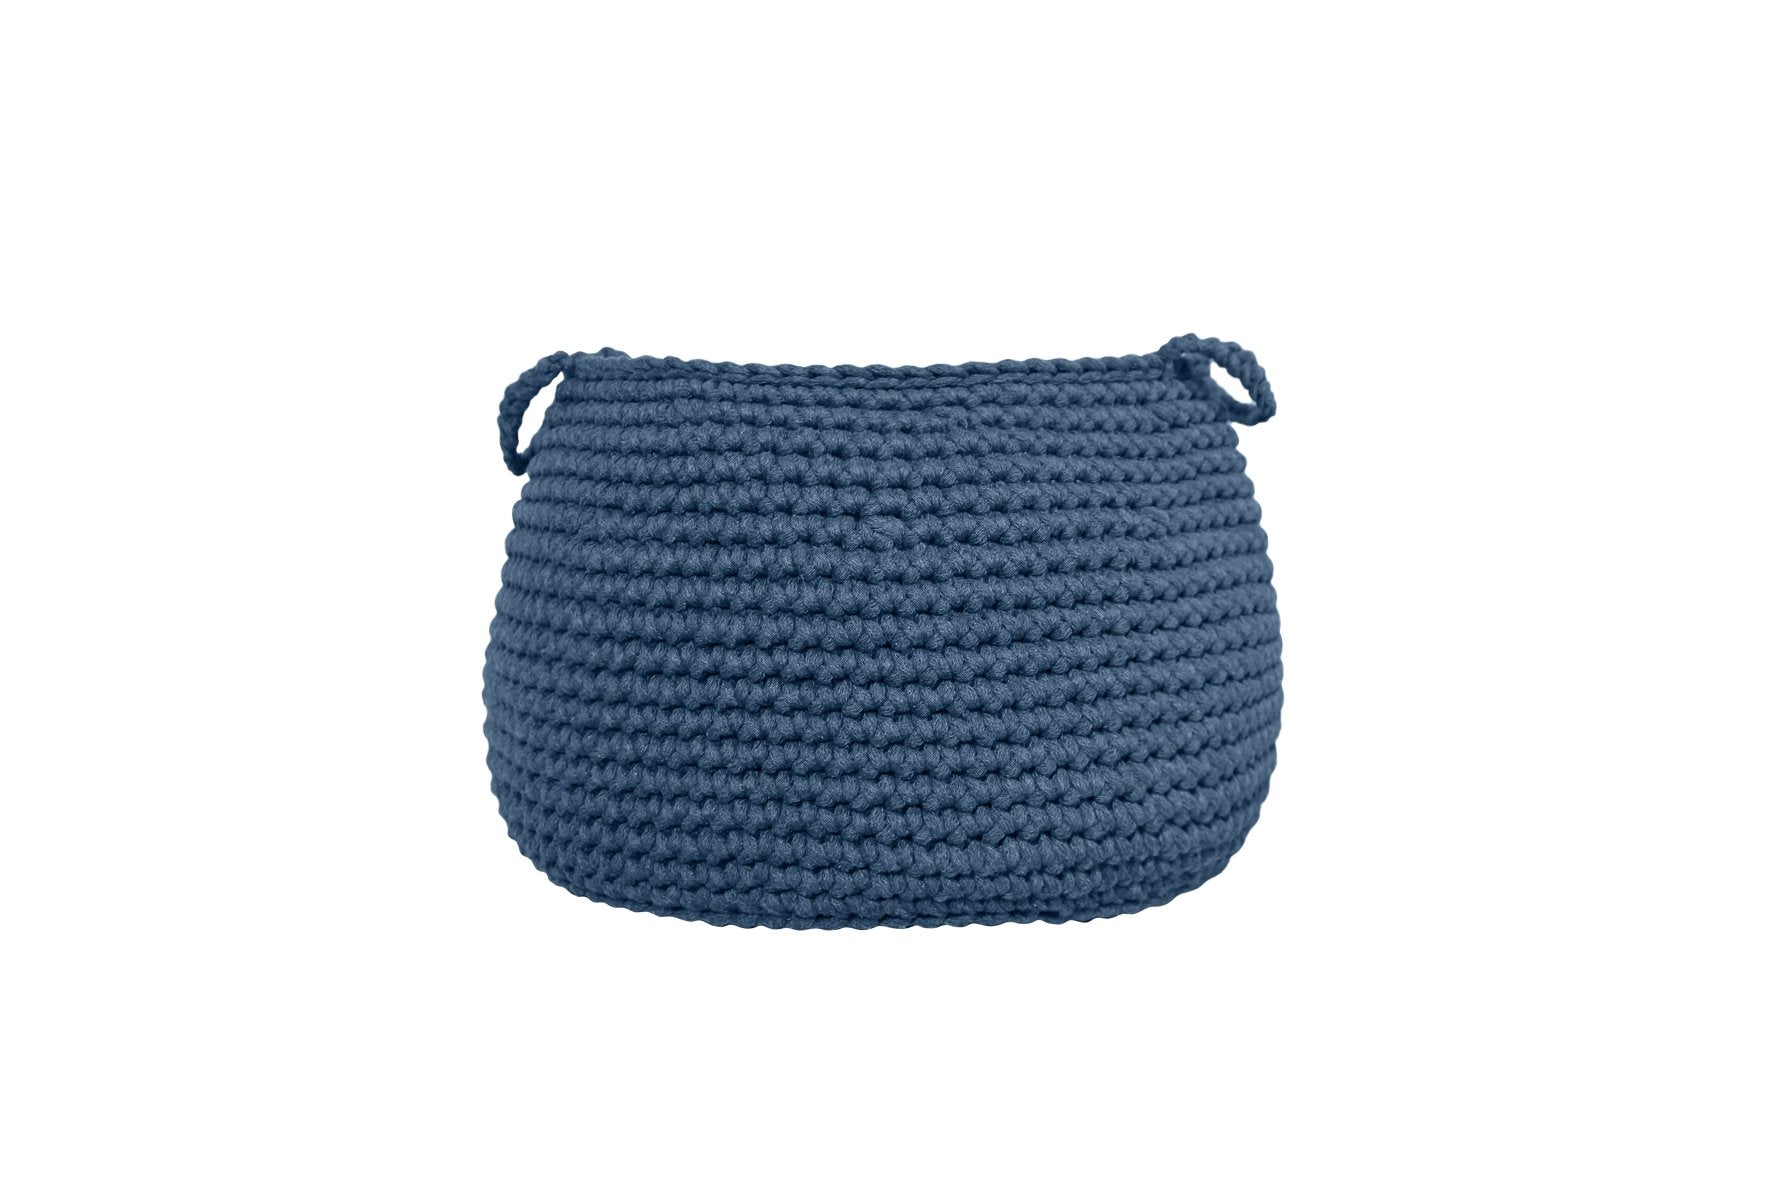 Zuri House Crochet Basket, Size L | DENIM BLUE